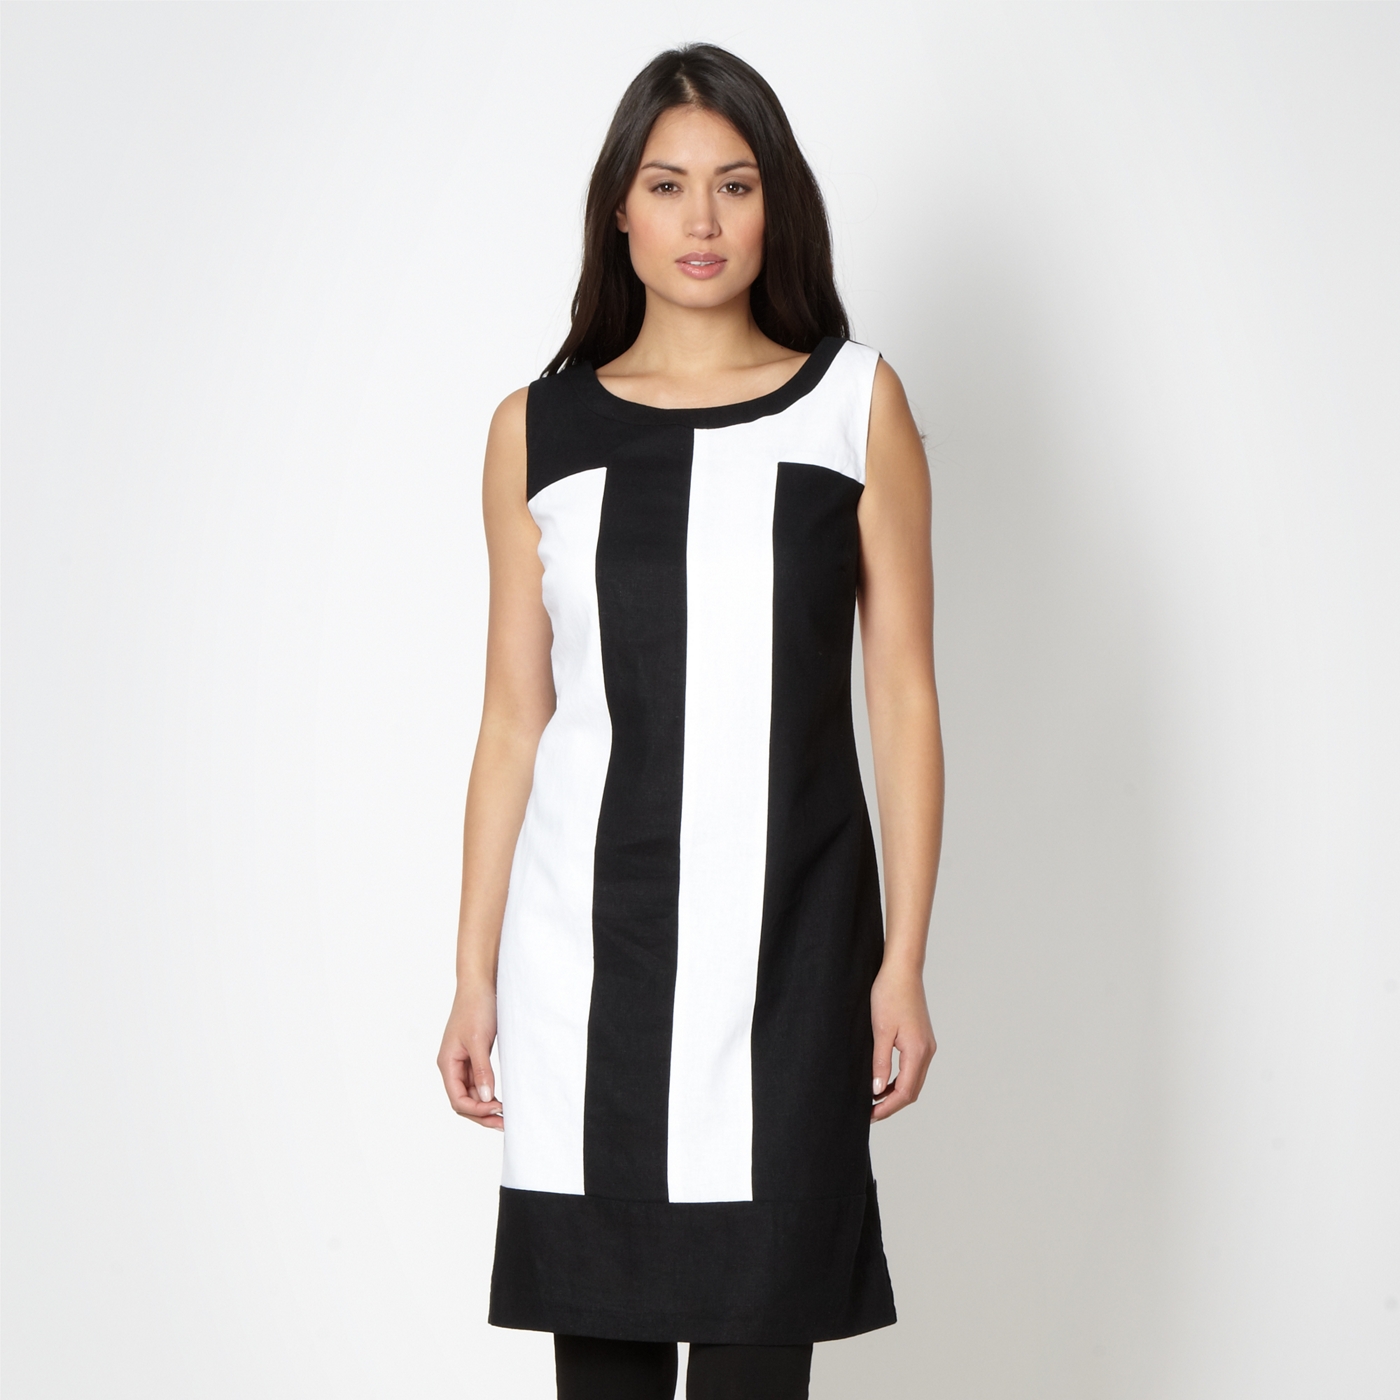 The Collection Petite Petite black panel linen blend tunic dress